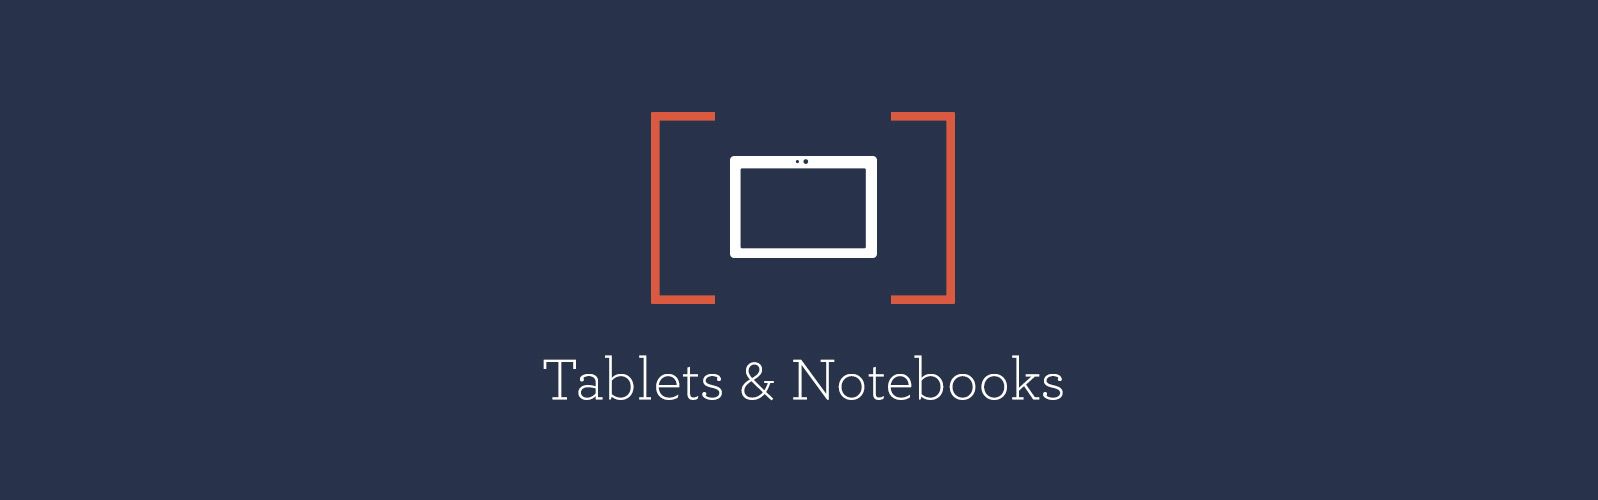 Tablets & Notebooks